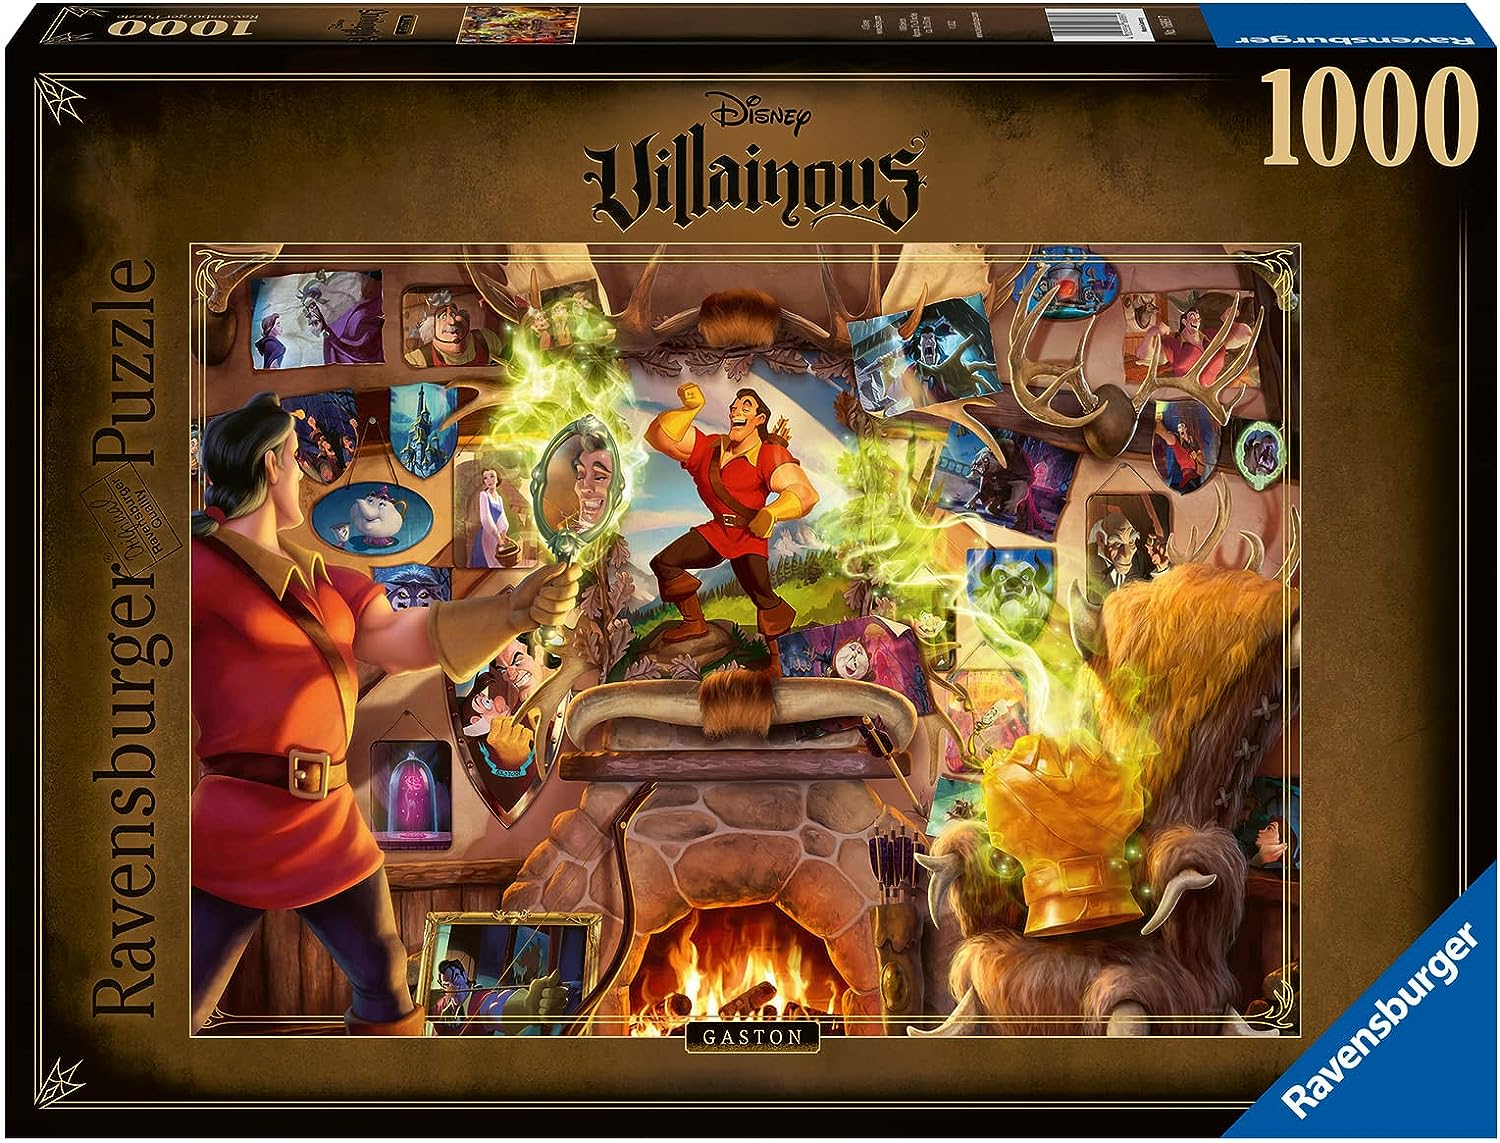 Ravensburger Puzzles (1000): Disney Villainous: Gaston 